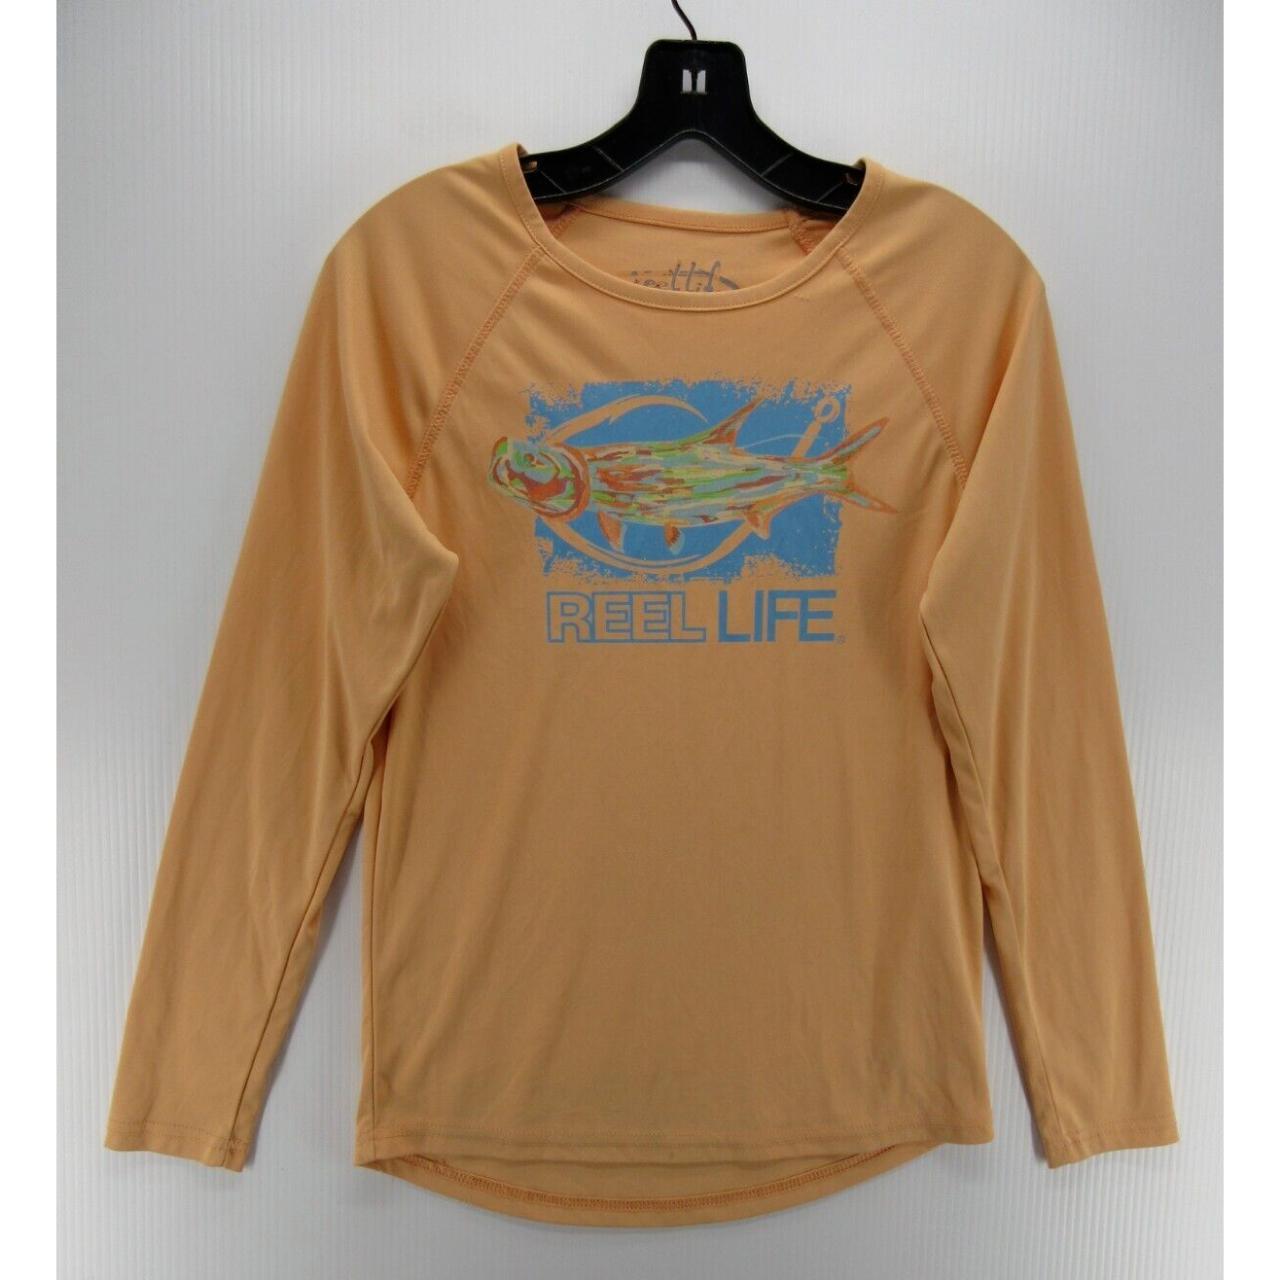 Reel Life Top Women Medium Orange Shirt Pullover